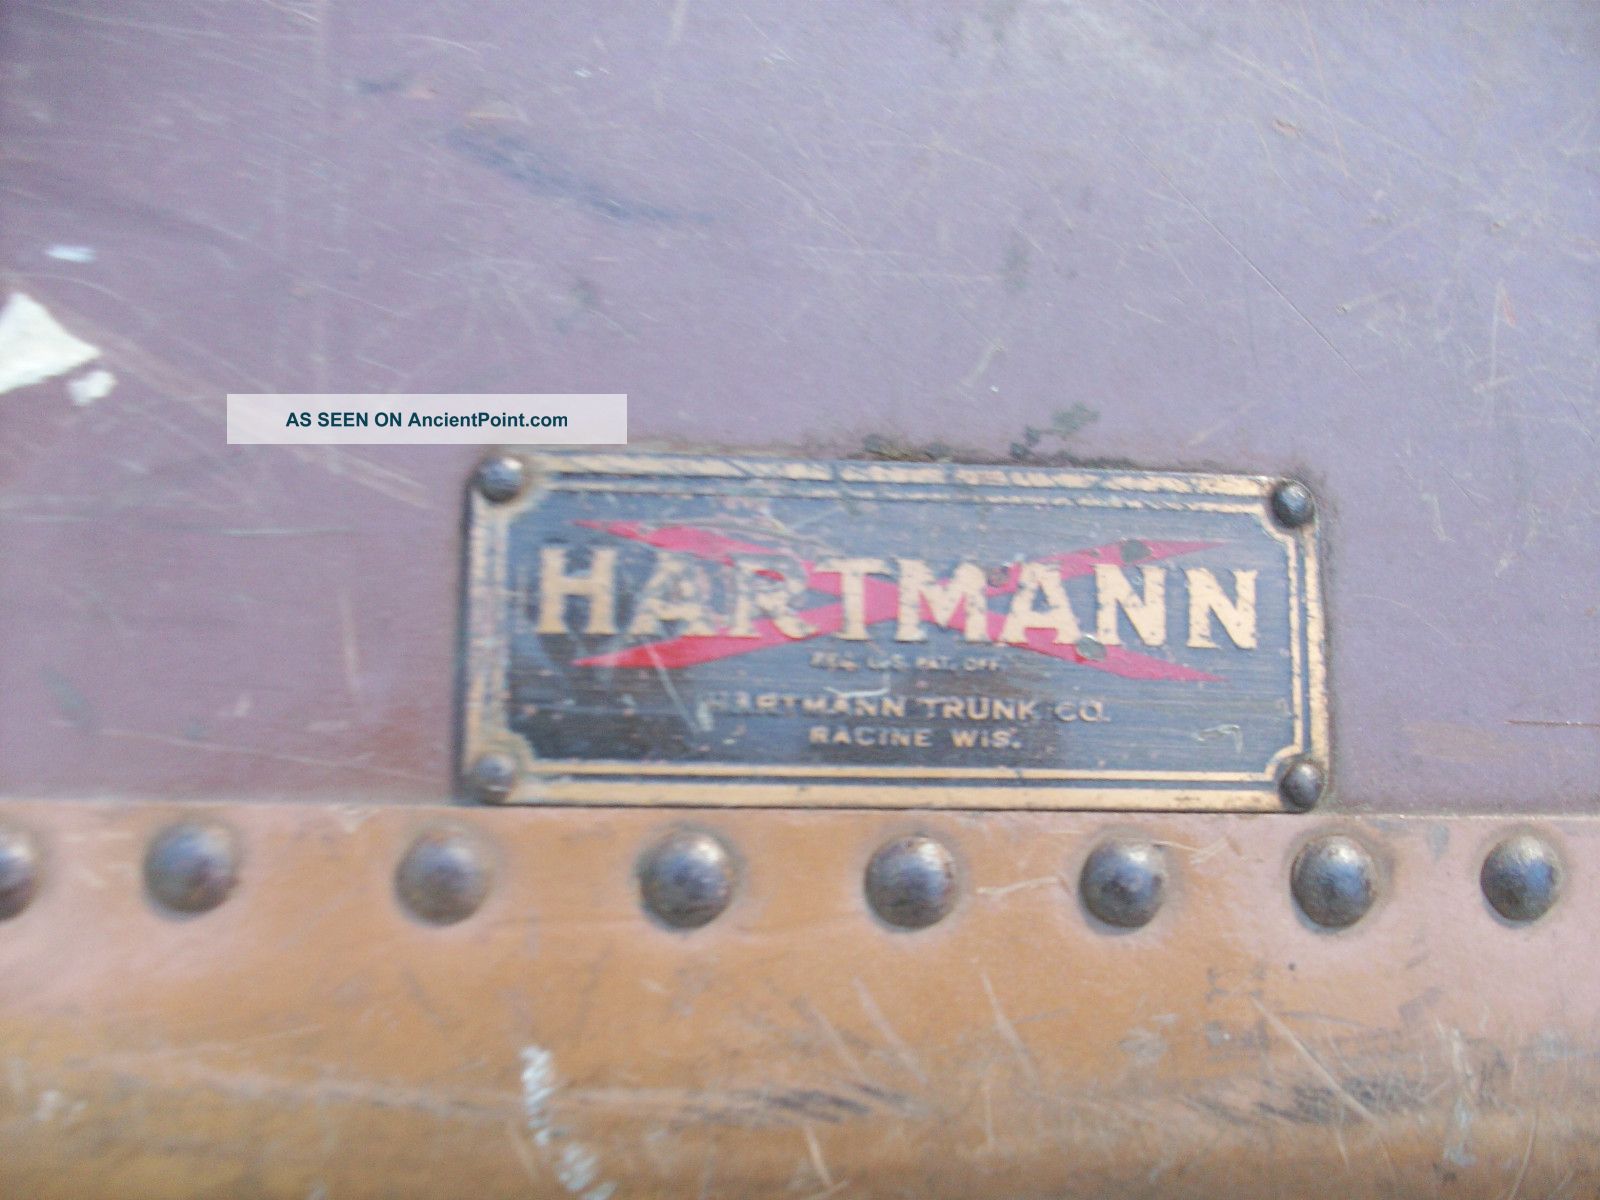 Antique/vintage Gibralterized Brown Hartmann Trunk 1900-1950 photo